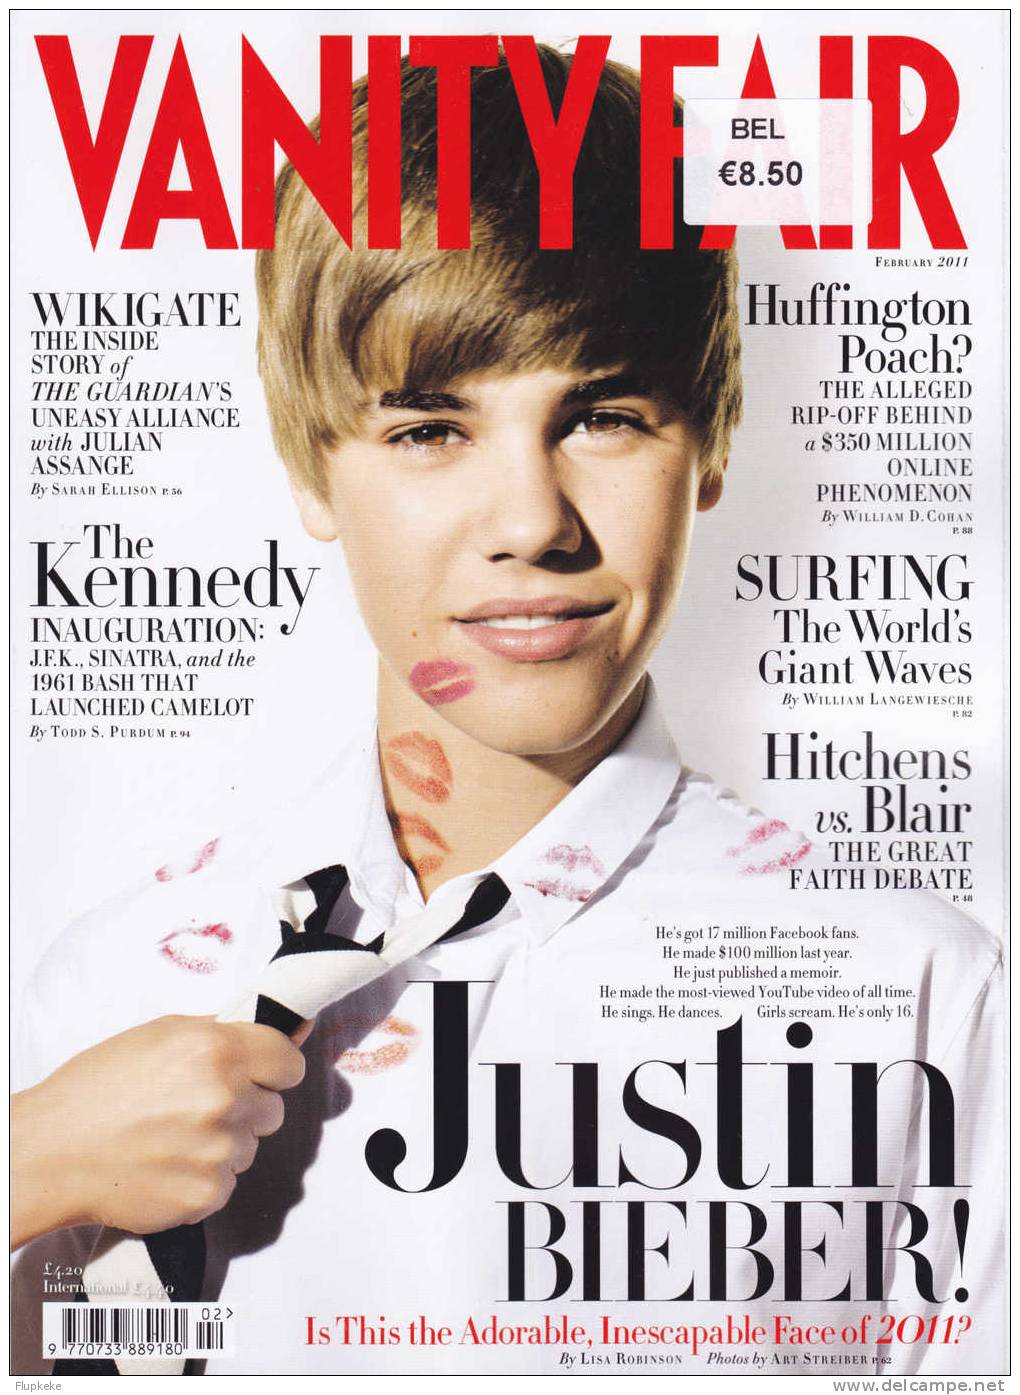 Vanity Fair 606 February 2011 Cover Justin Bieber - Divertissement